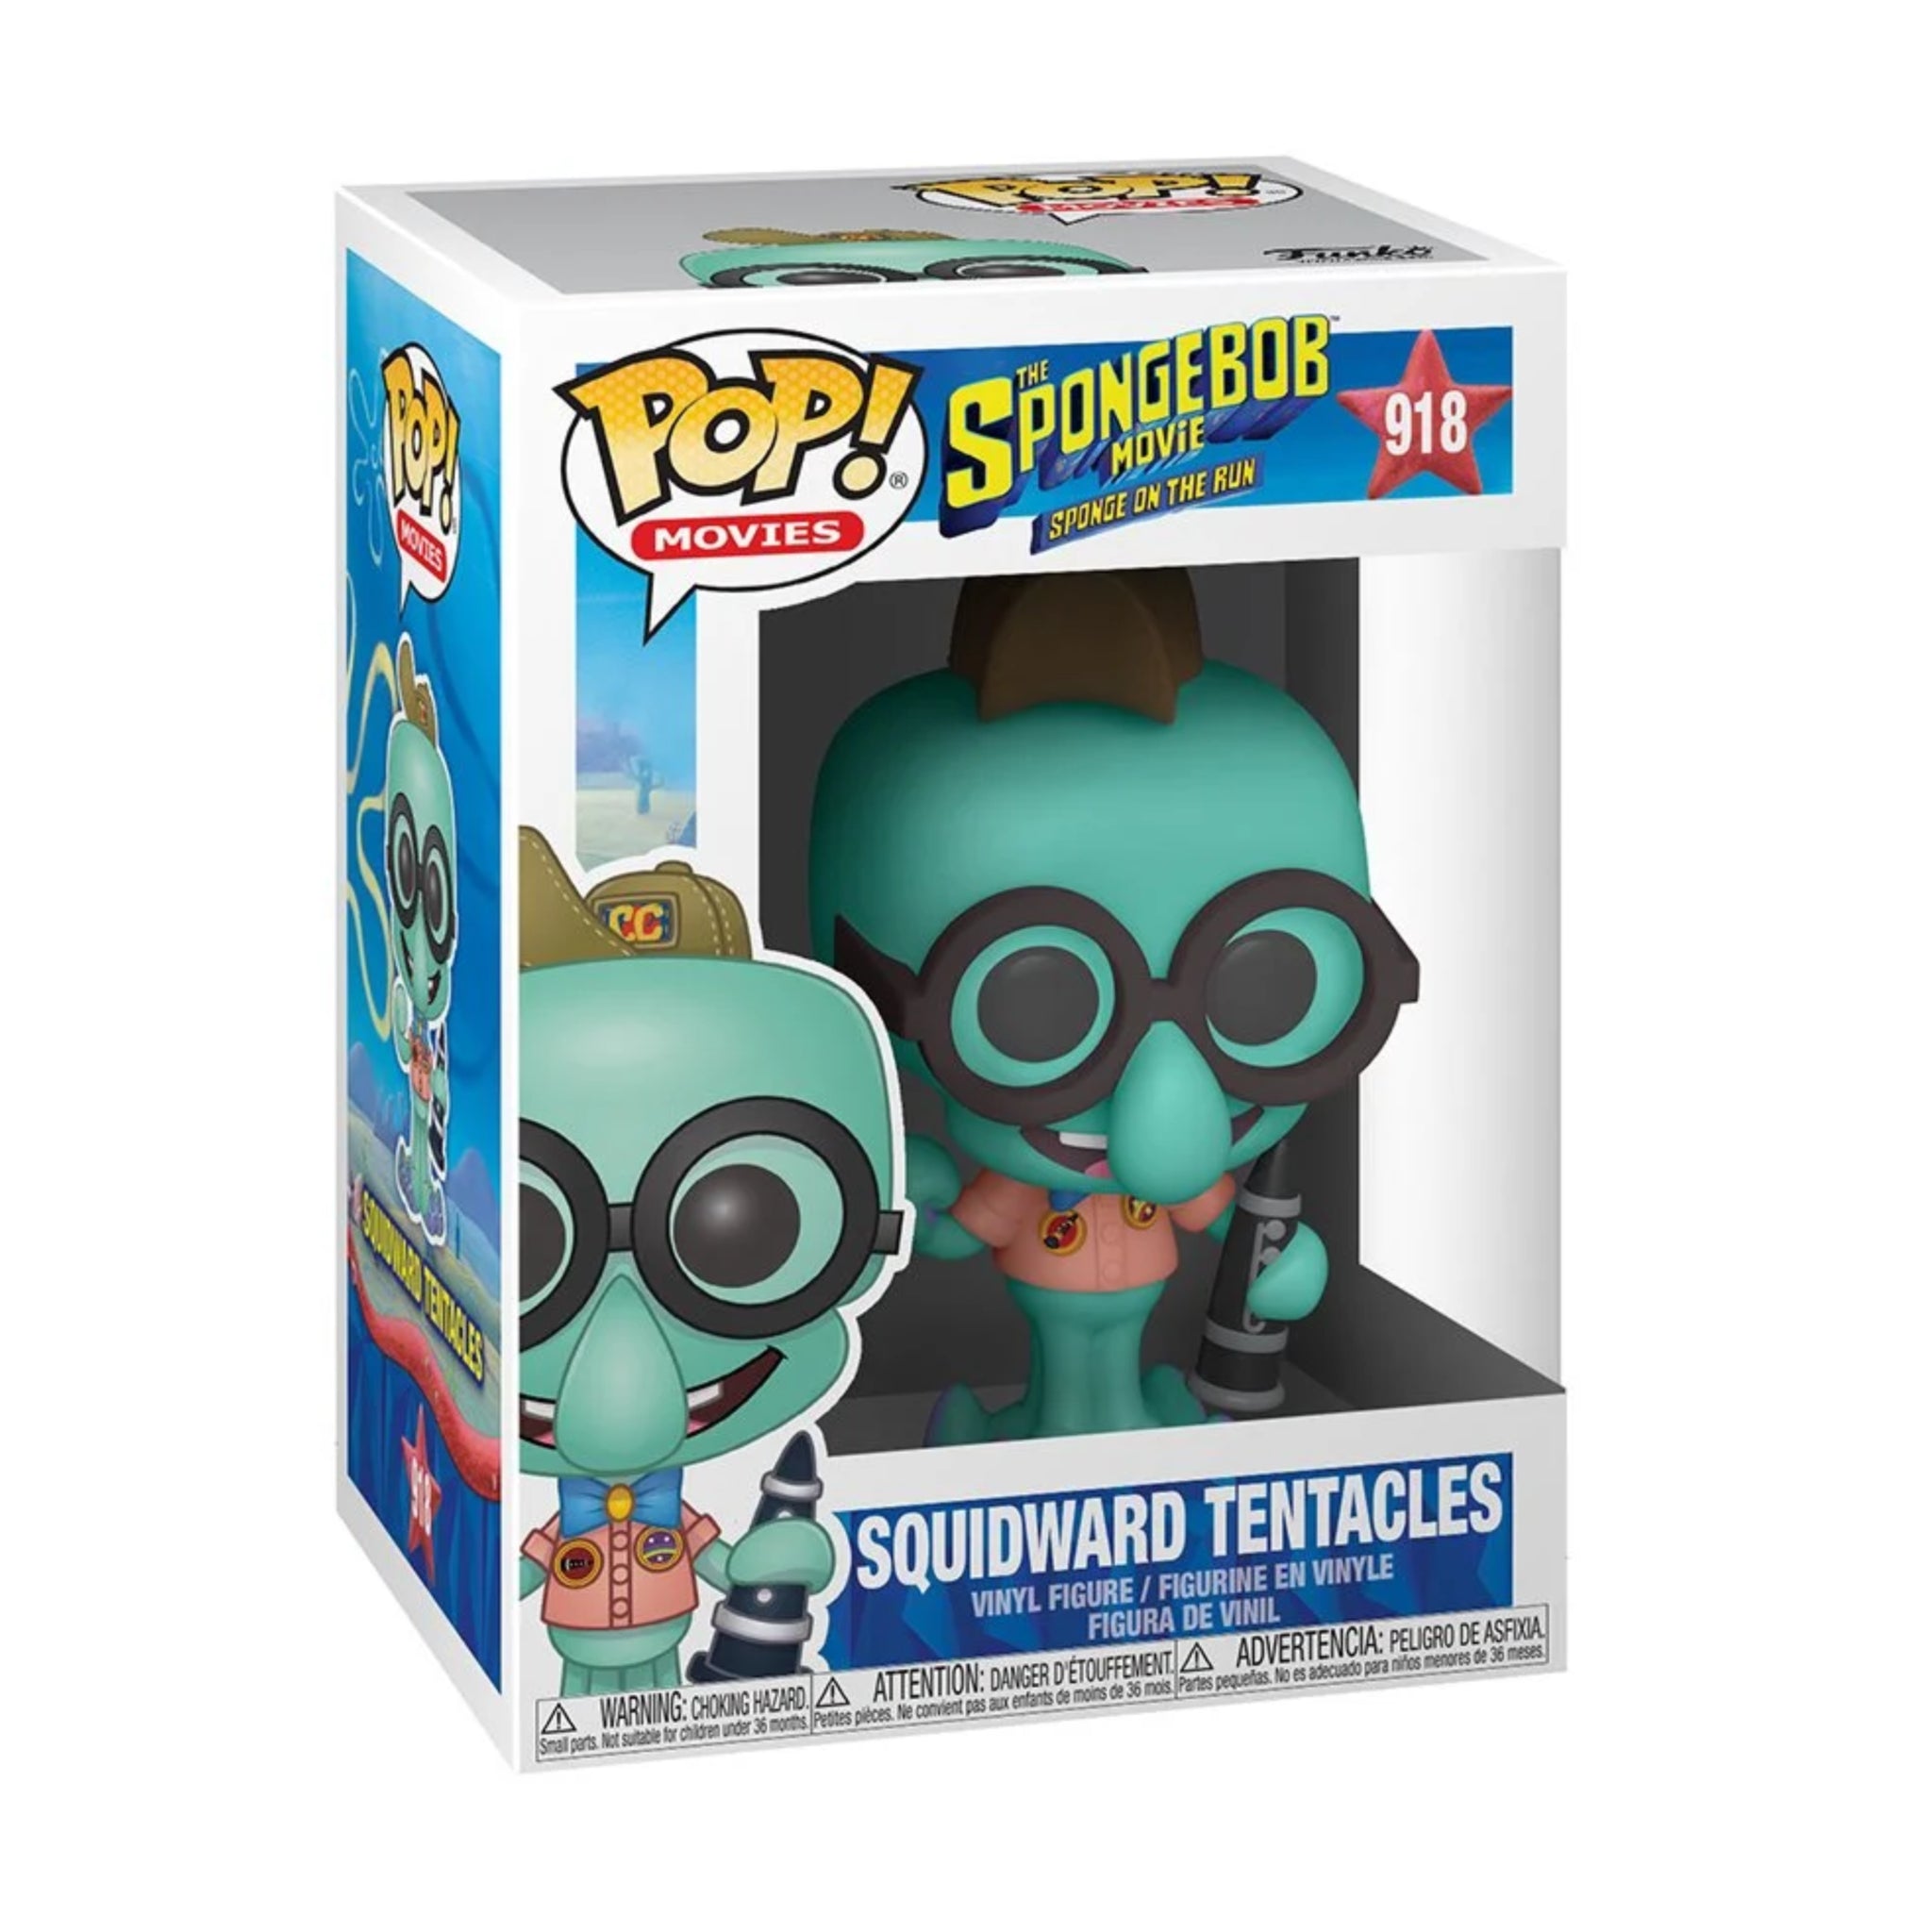 Squidward Tentacles Funko Pop!